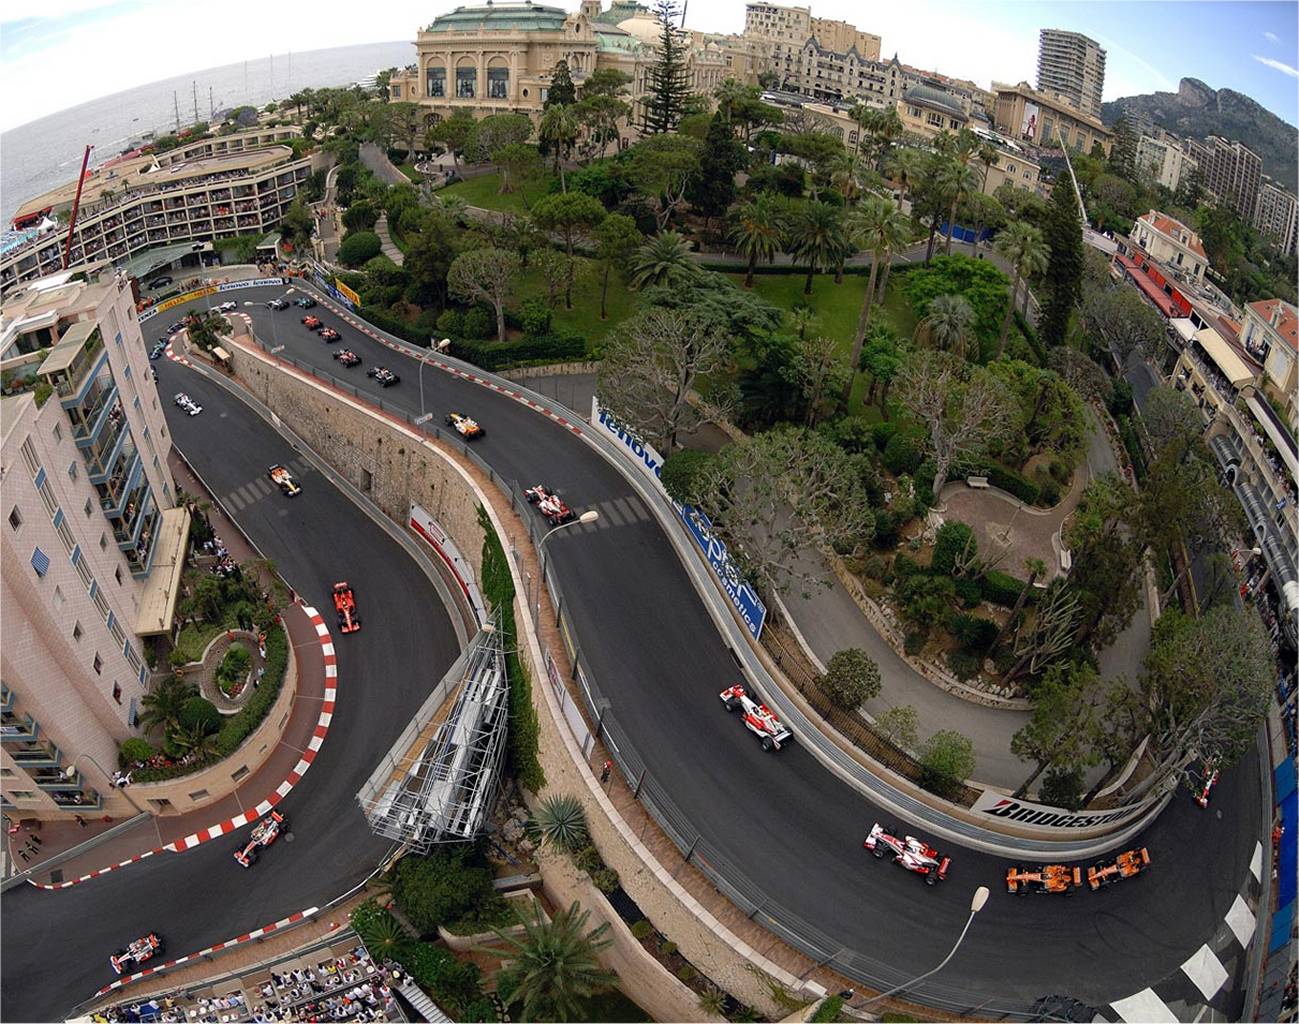 Circuit De Monaco Street circuit, Monaco Grand Prix photos | Photobundle